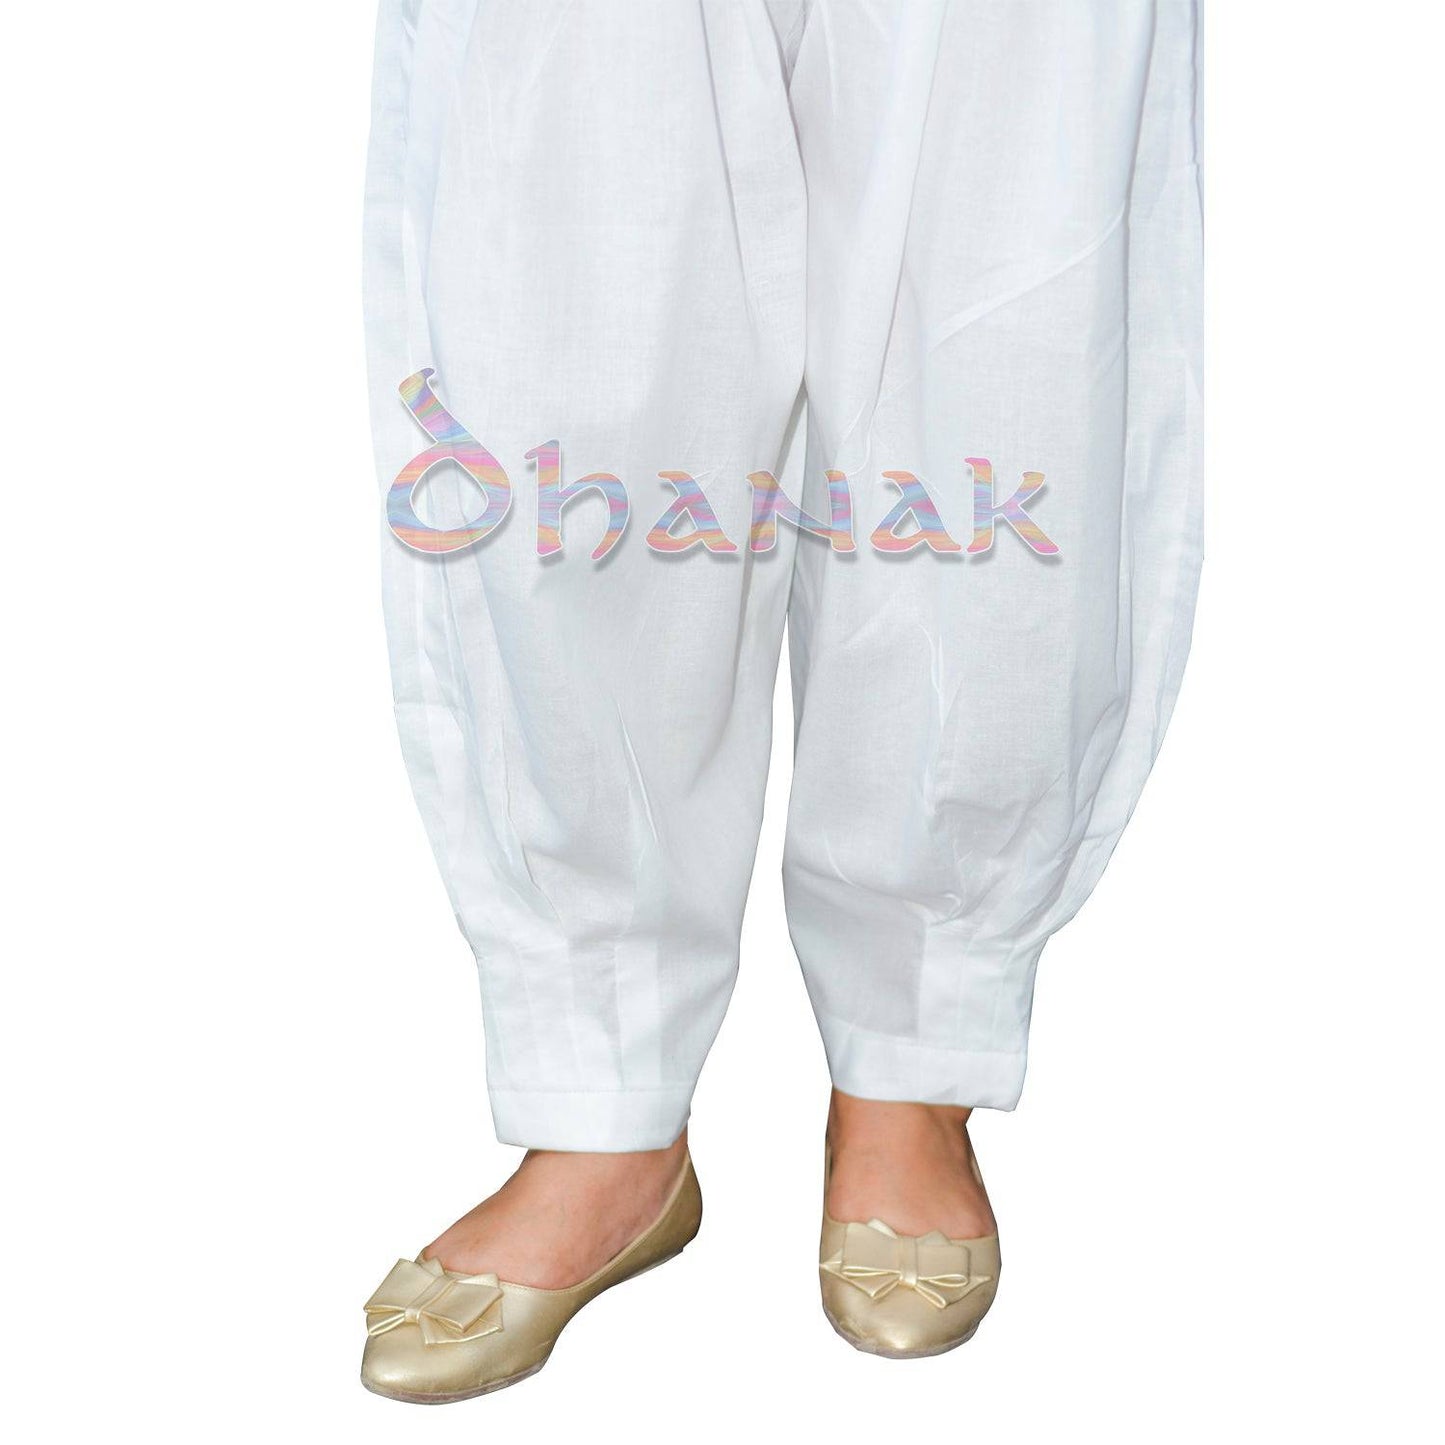 Black & White Pleated Design Shalwar for Women in Cotton - PLS01 - Dhanak Boutique